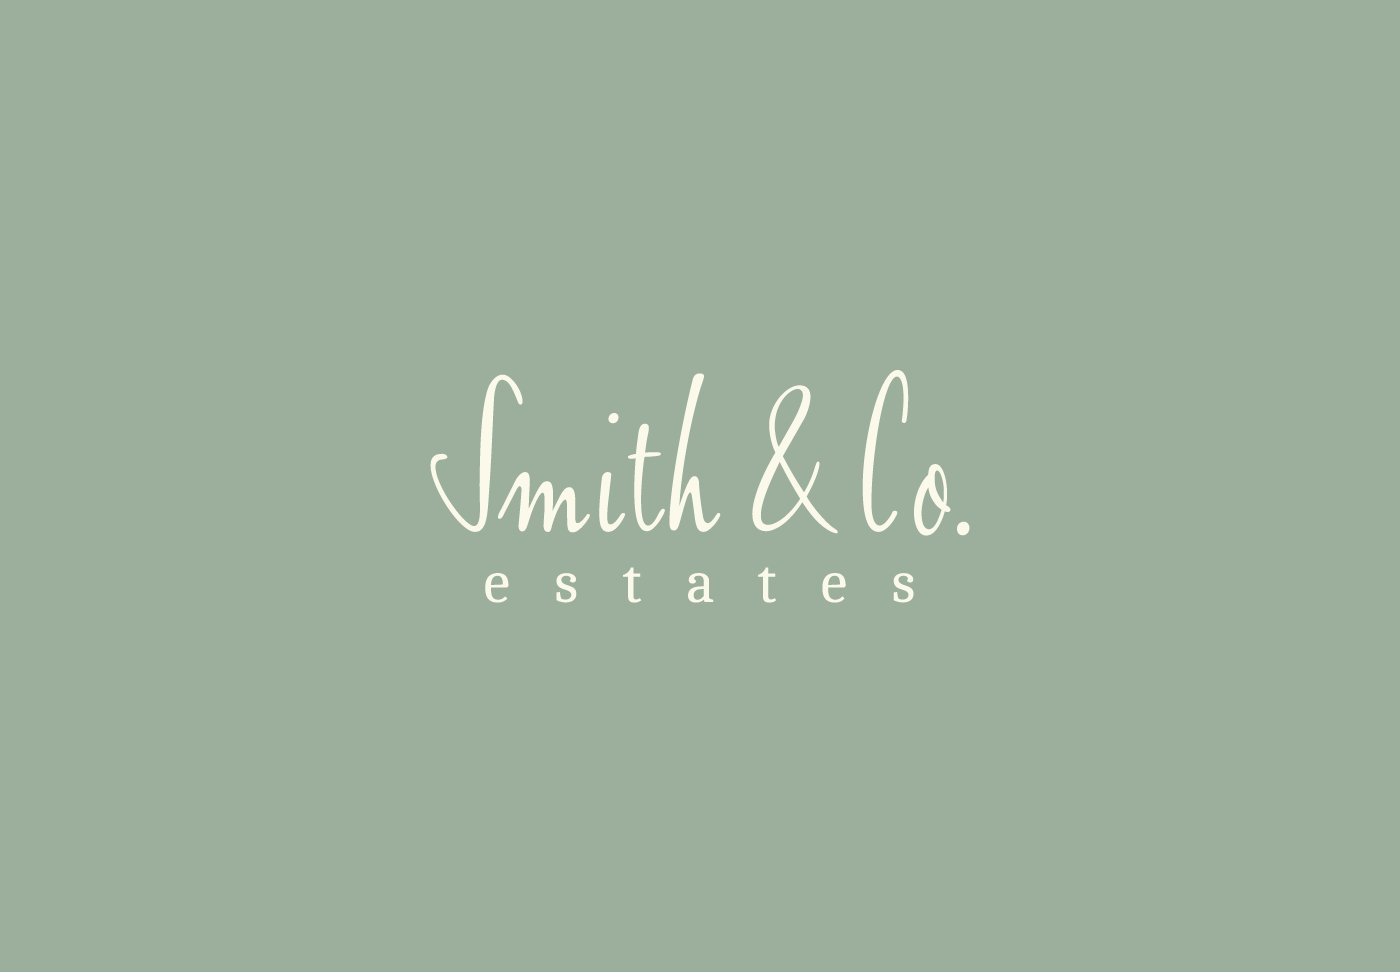 Smith & Co Estate Agency branding